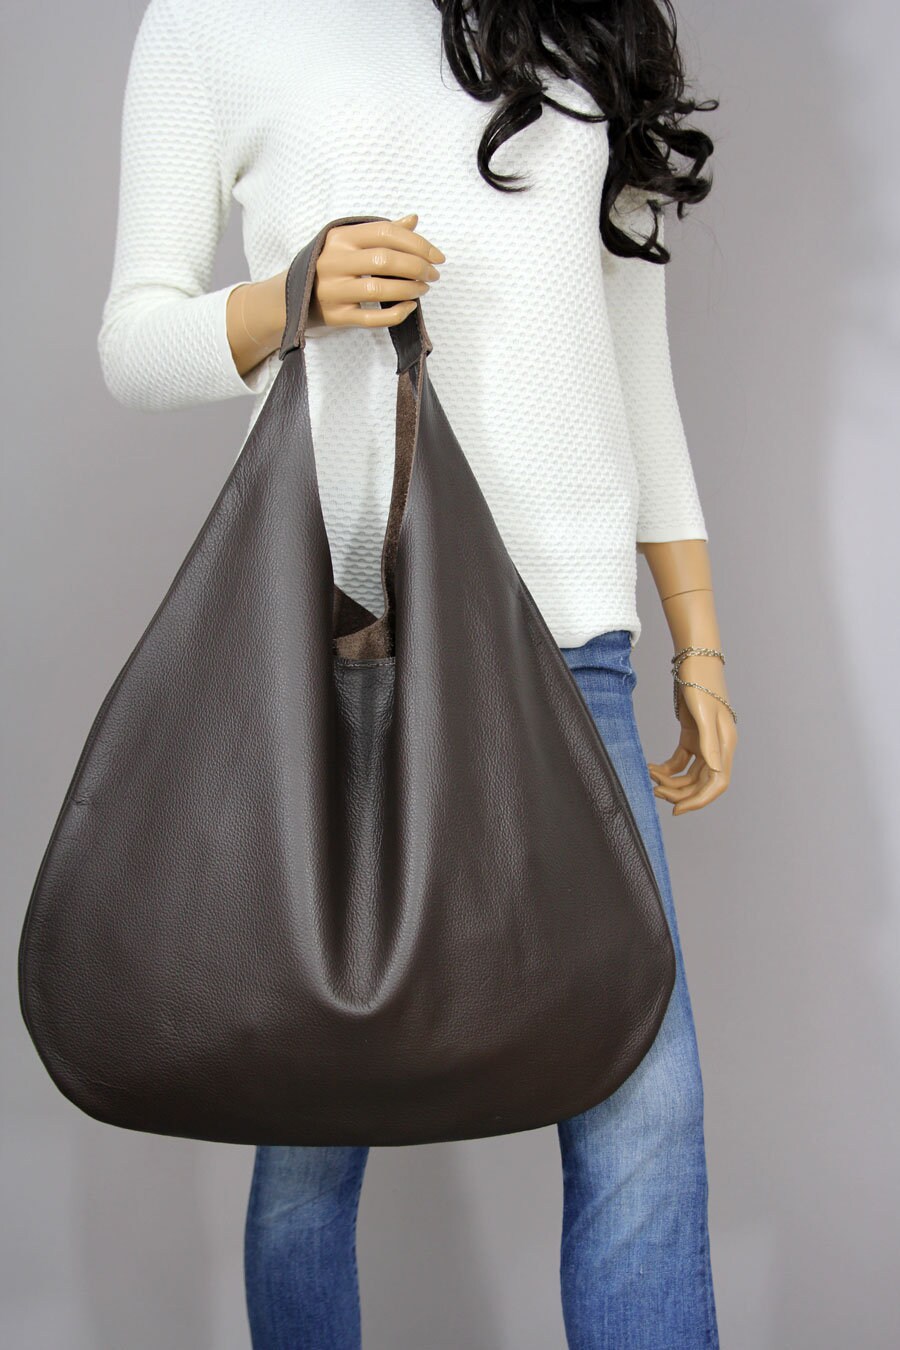 BROWN LEATHER HOBO bag Large leather bag Brown Handbag for | Etsy